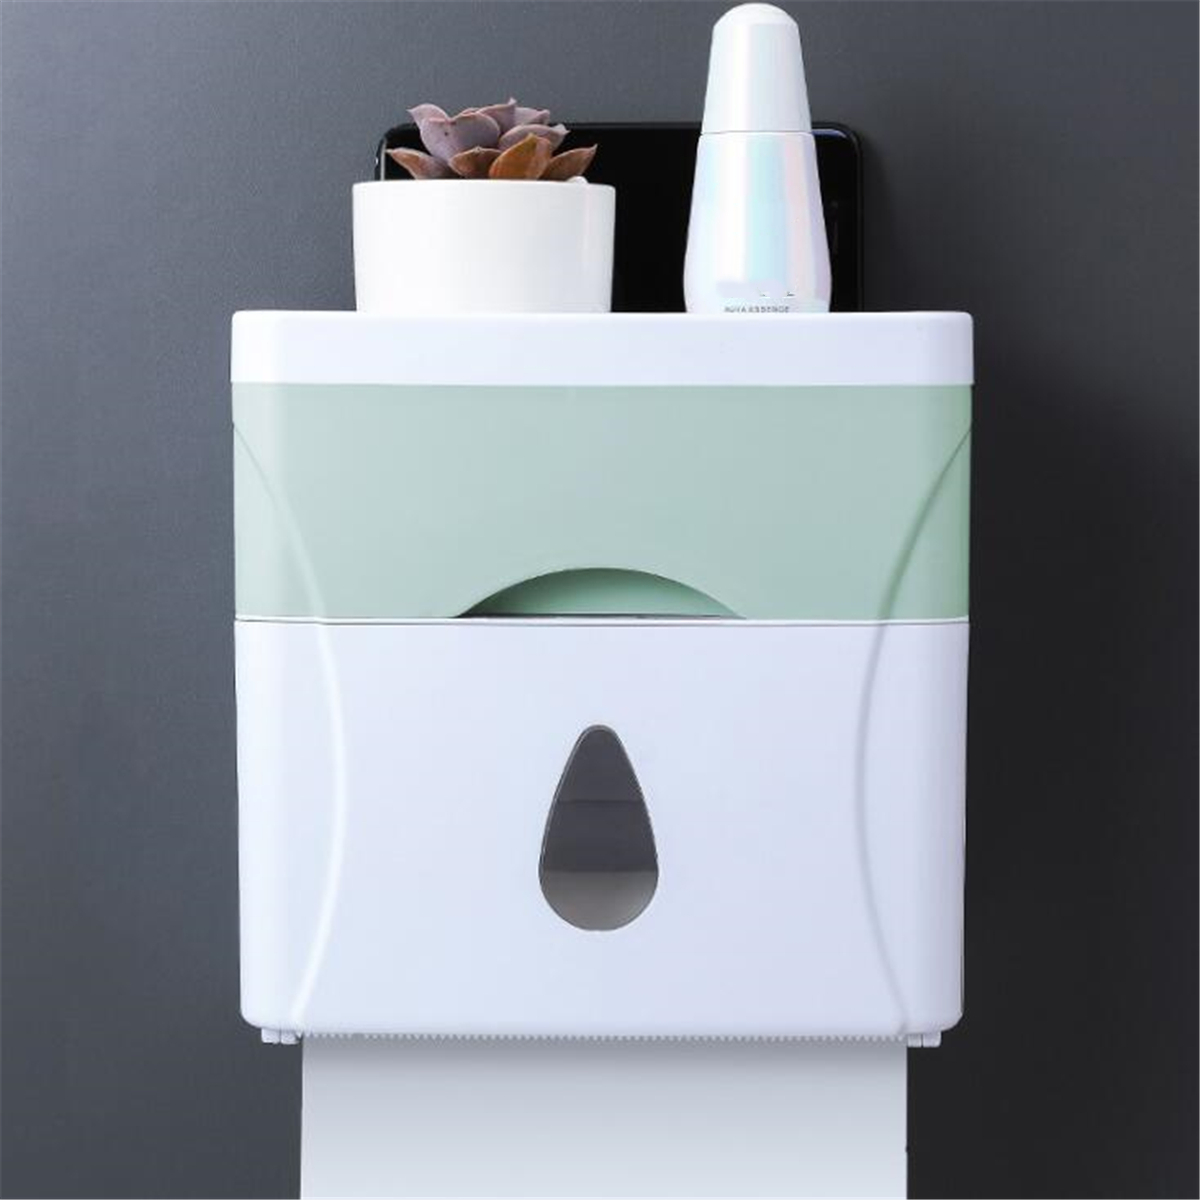 

21.5*11.9*13.3cm Creative Plastic Bath Wall Mounted Paper Shelf Holder Storage Box Toilet Tissue Dispenser